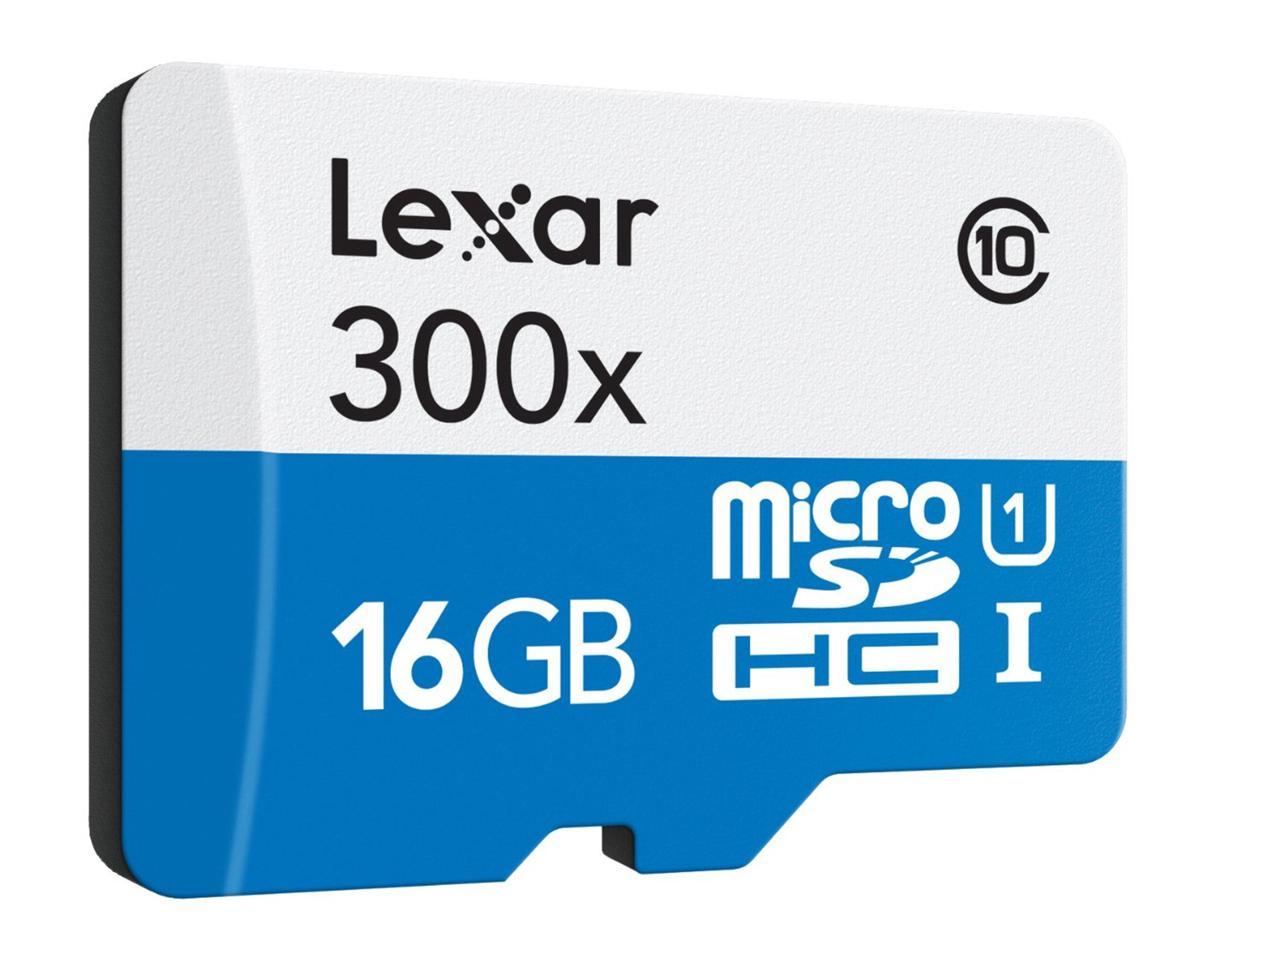 Lexar Platinum II 300x SDHC Flash Memory Card for Car Dash Cam and Cellphone 16GB